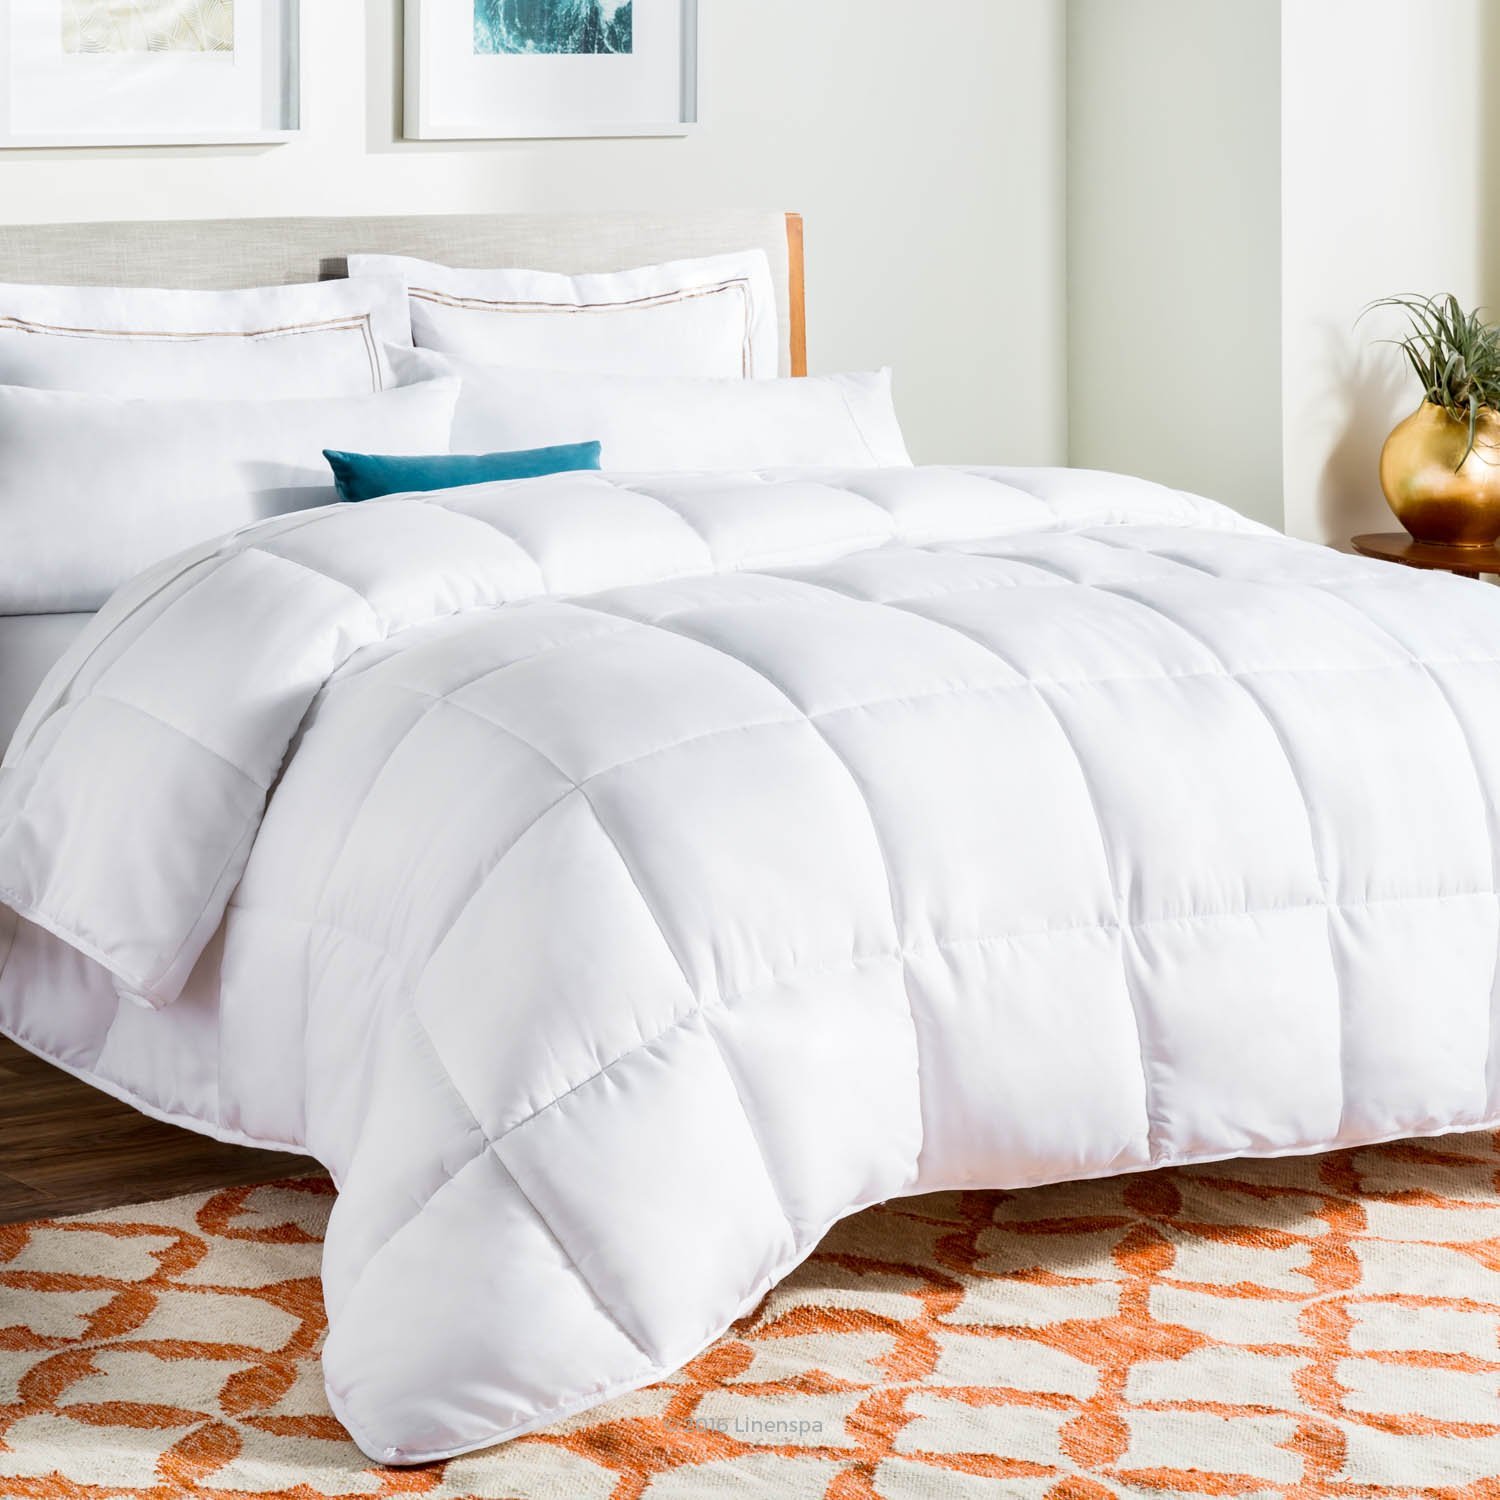 Linenspa White Comforter